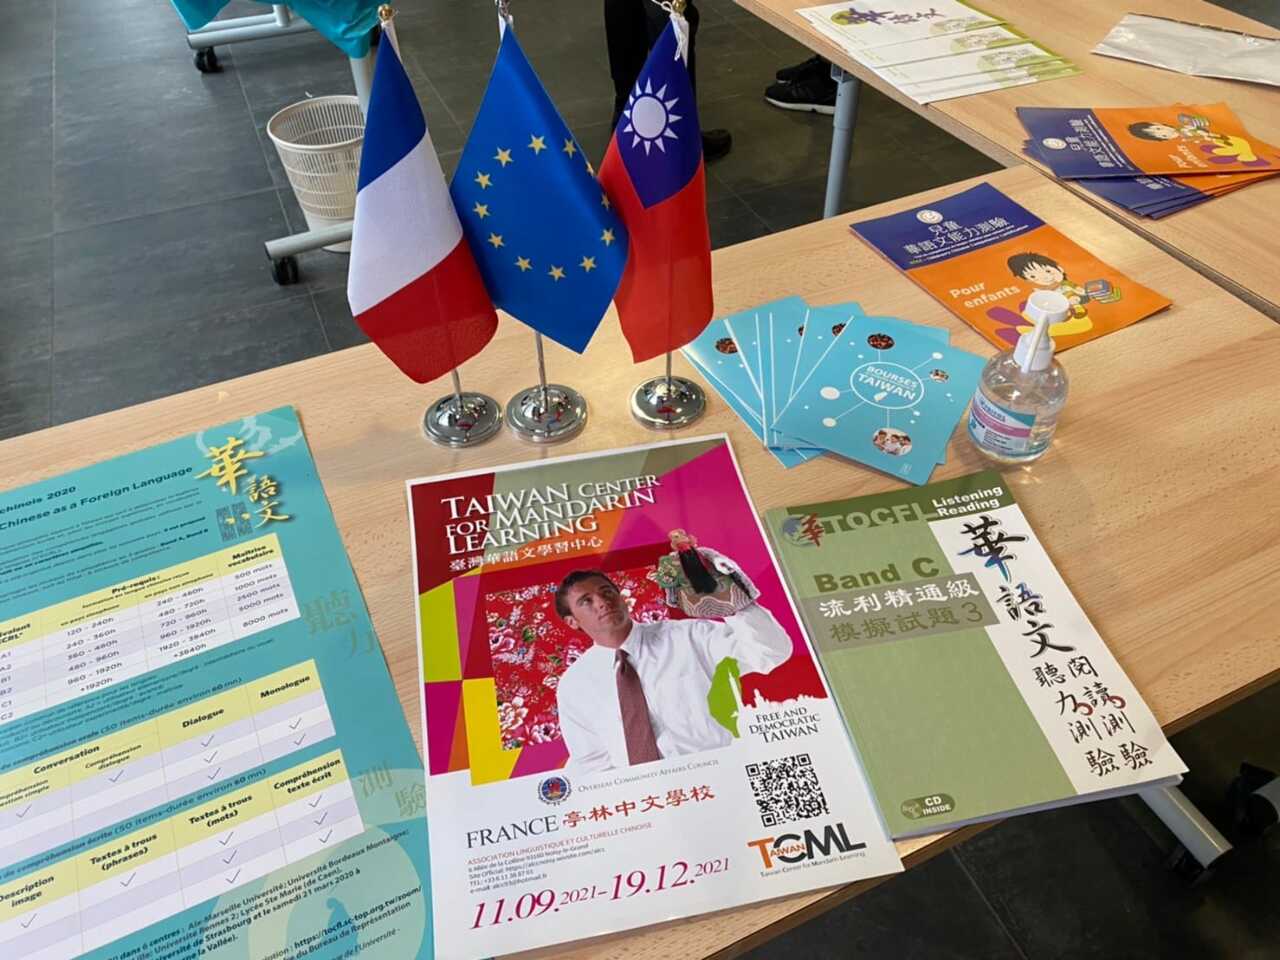 Le Premier Taiwan Center for Mandarin Learning inauguré en France